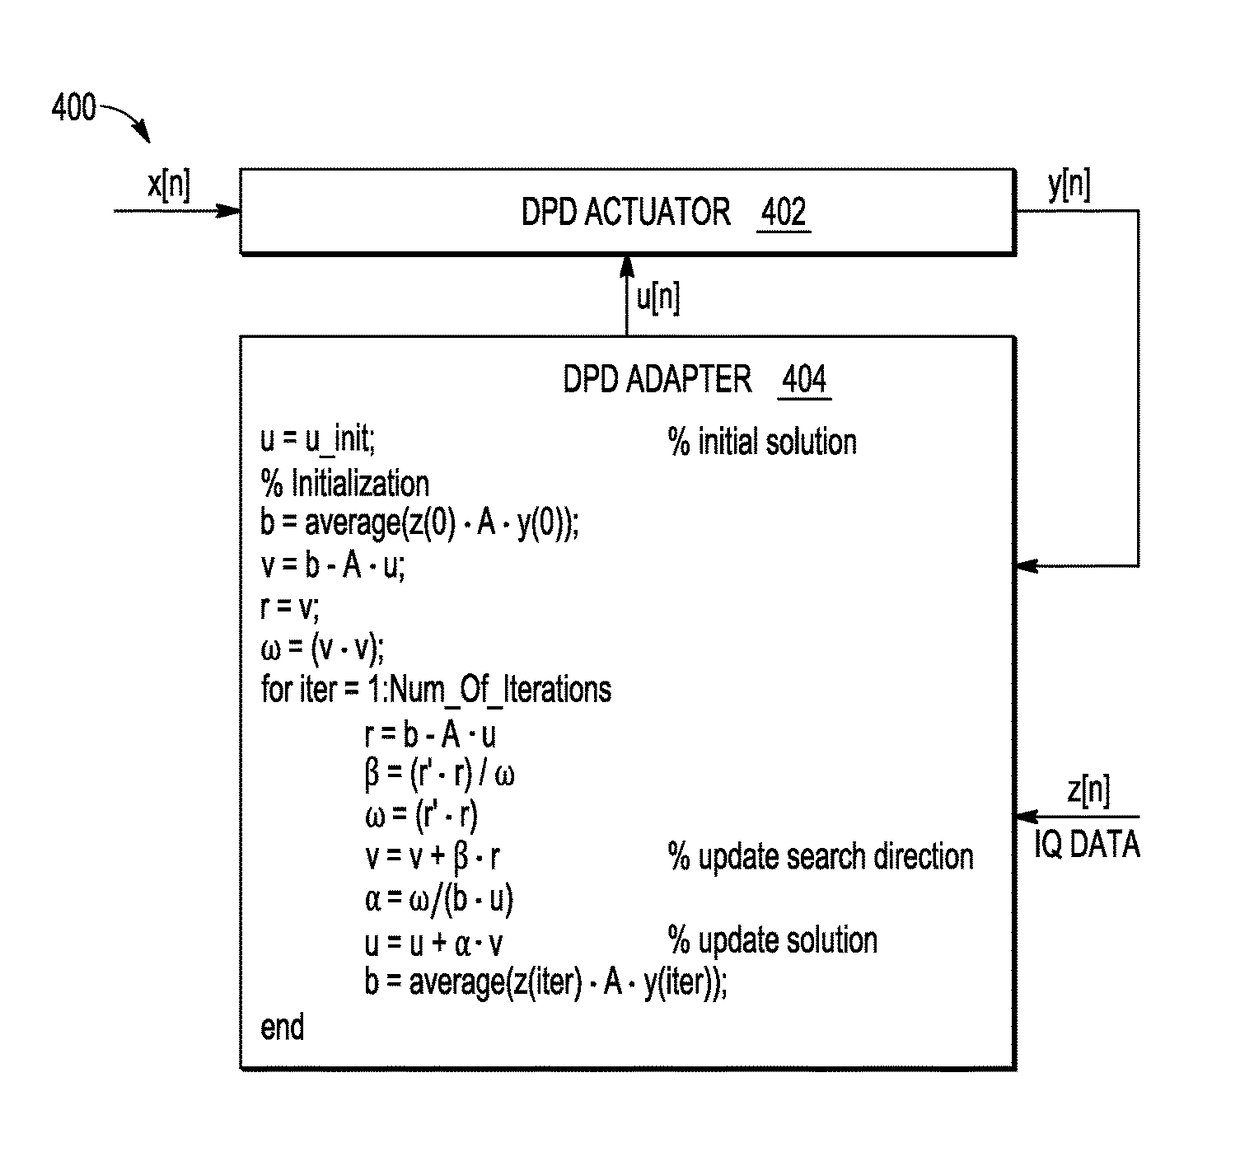 Fixed-point conjugate gradient digital pre-distortion (DPD) adaptation